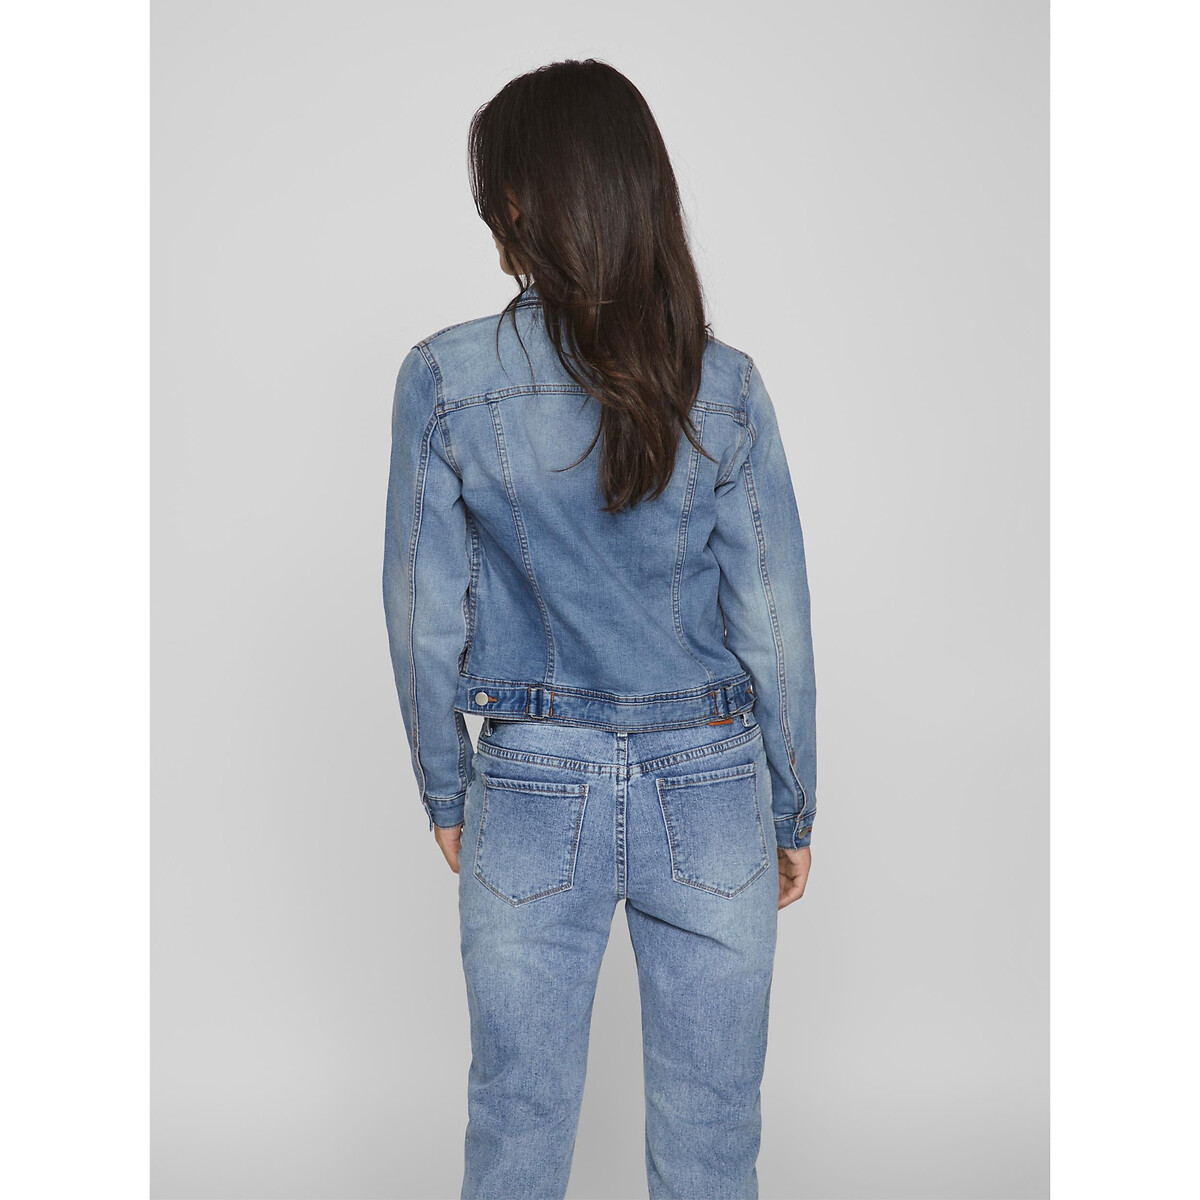 Куртка Короткая прямого покроя из джинсовой ткани XS синий LaRedoute, размер XS - фото 5